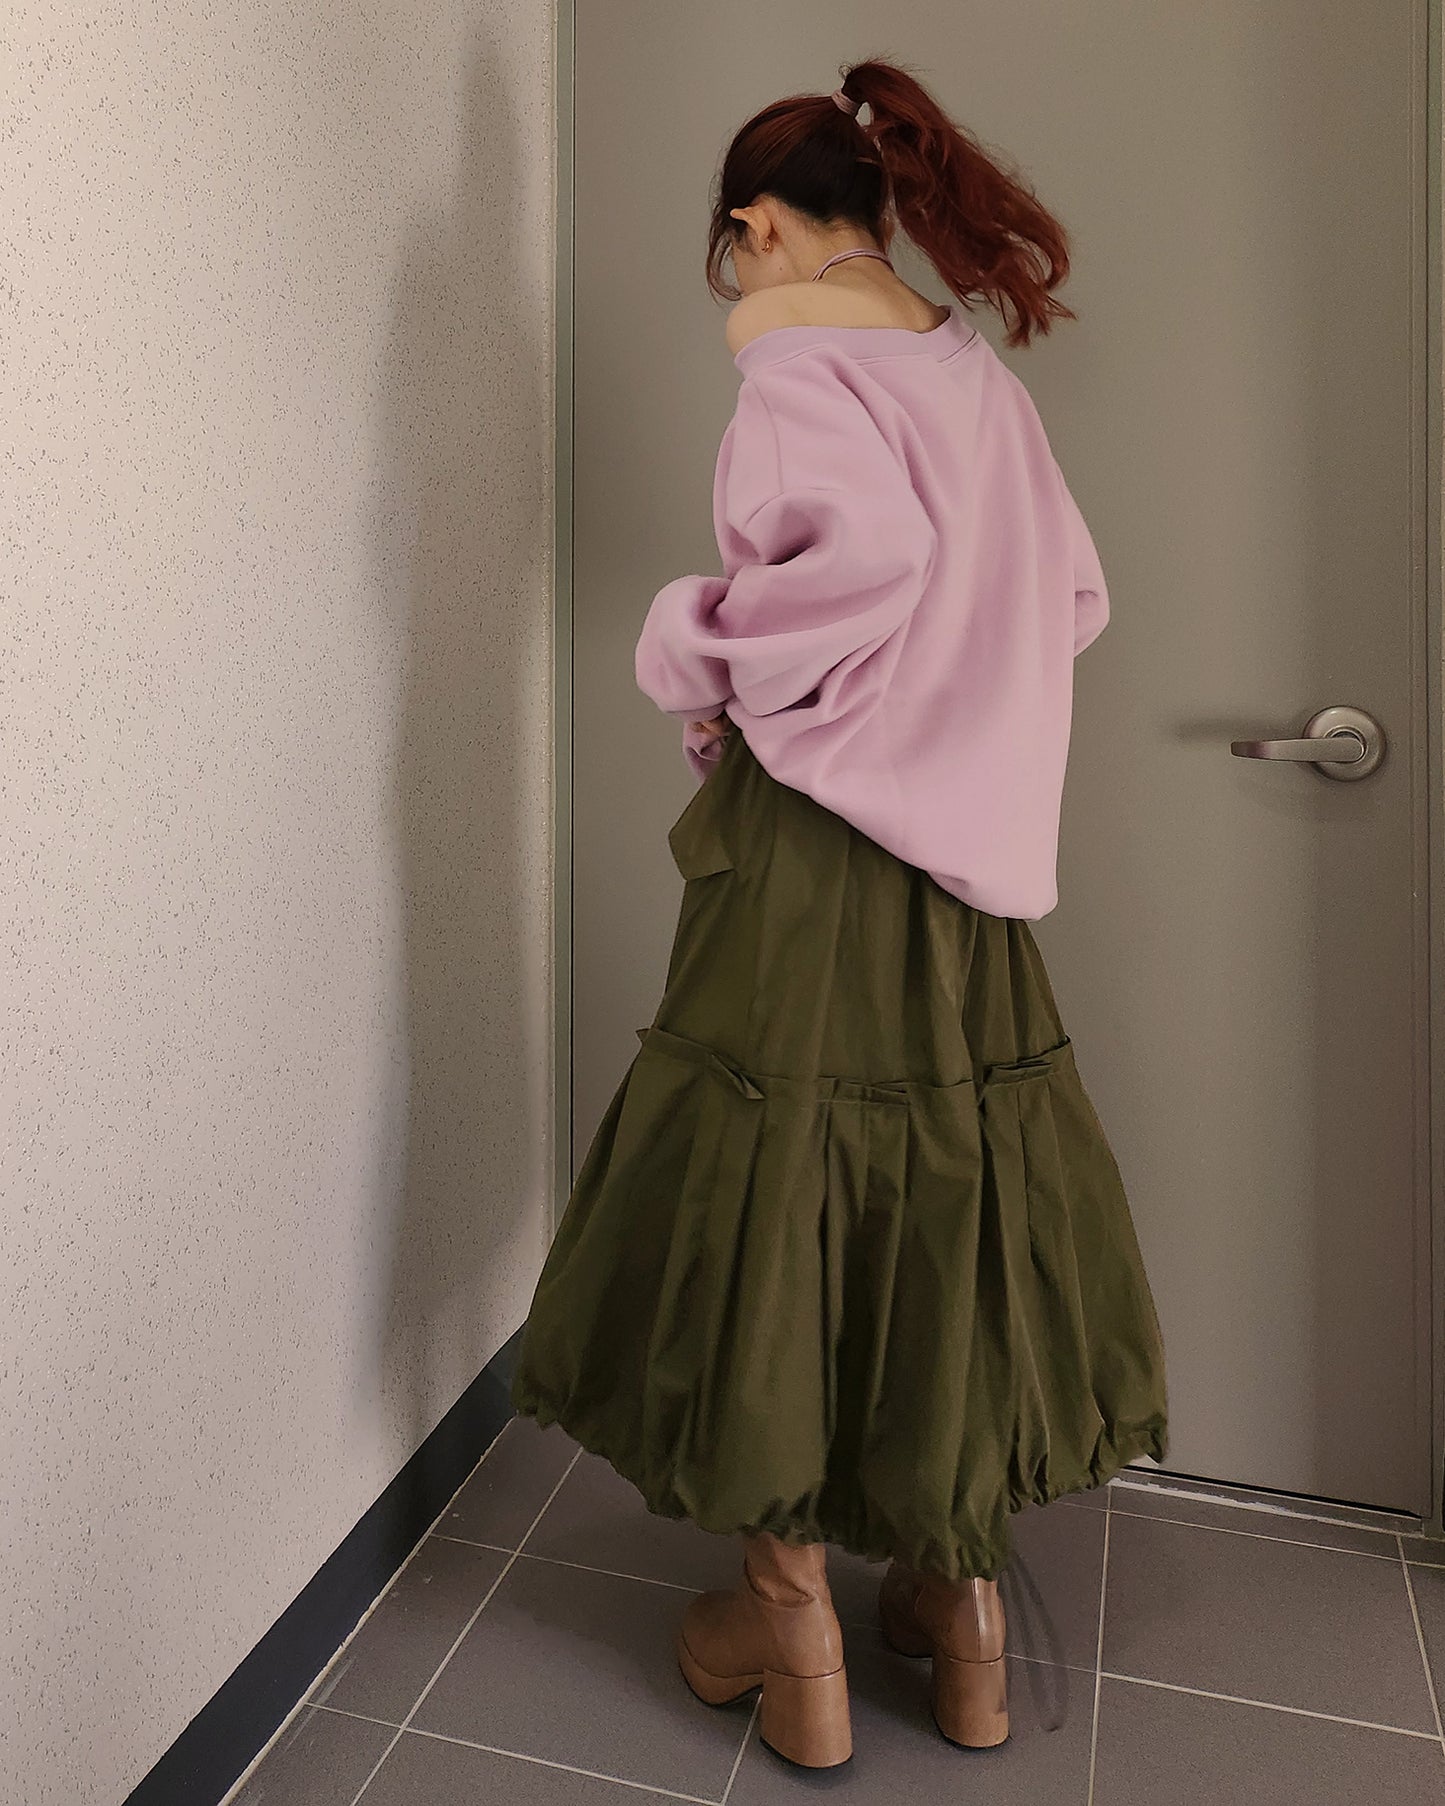 MA-1 like row pleated nylon skirt